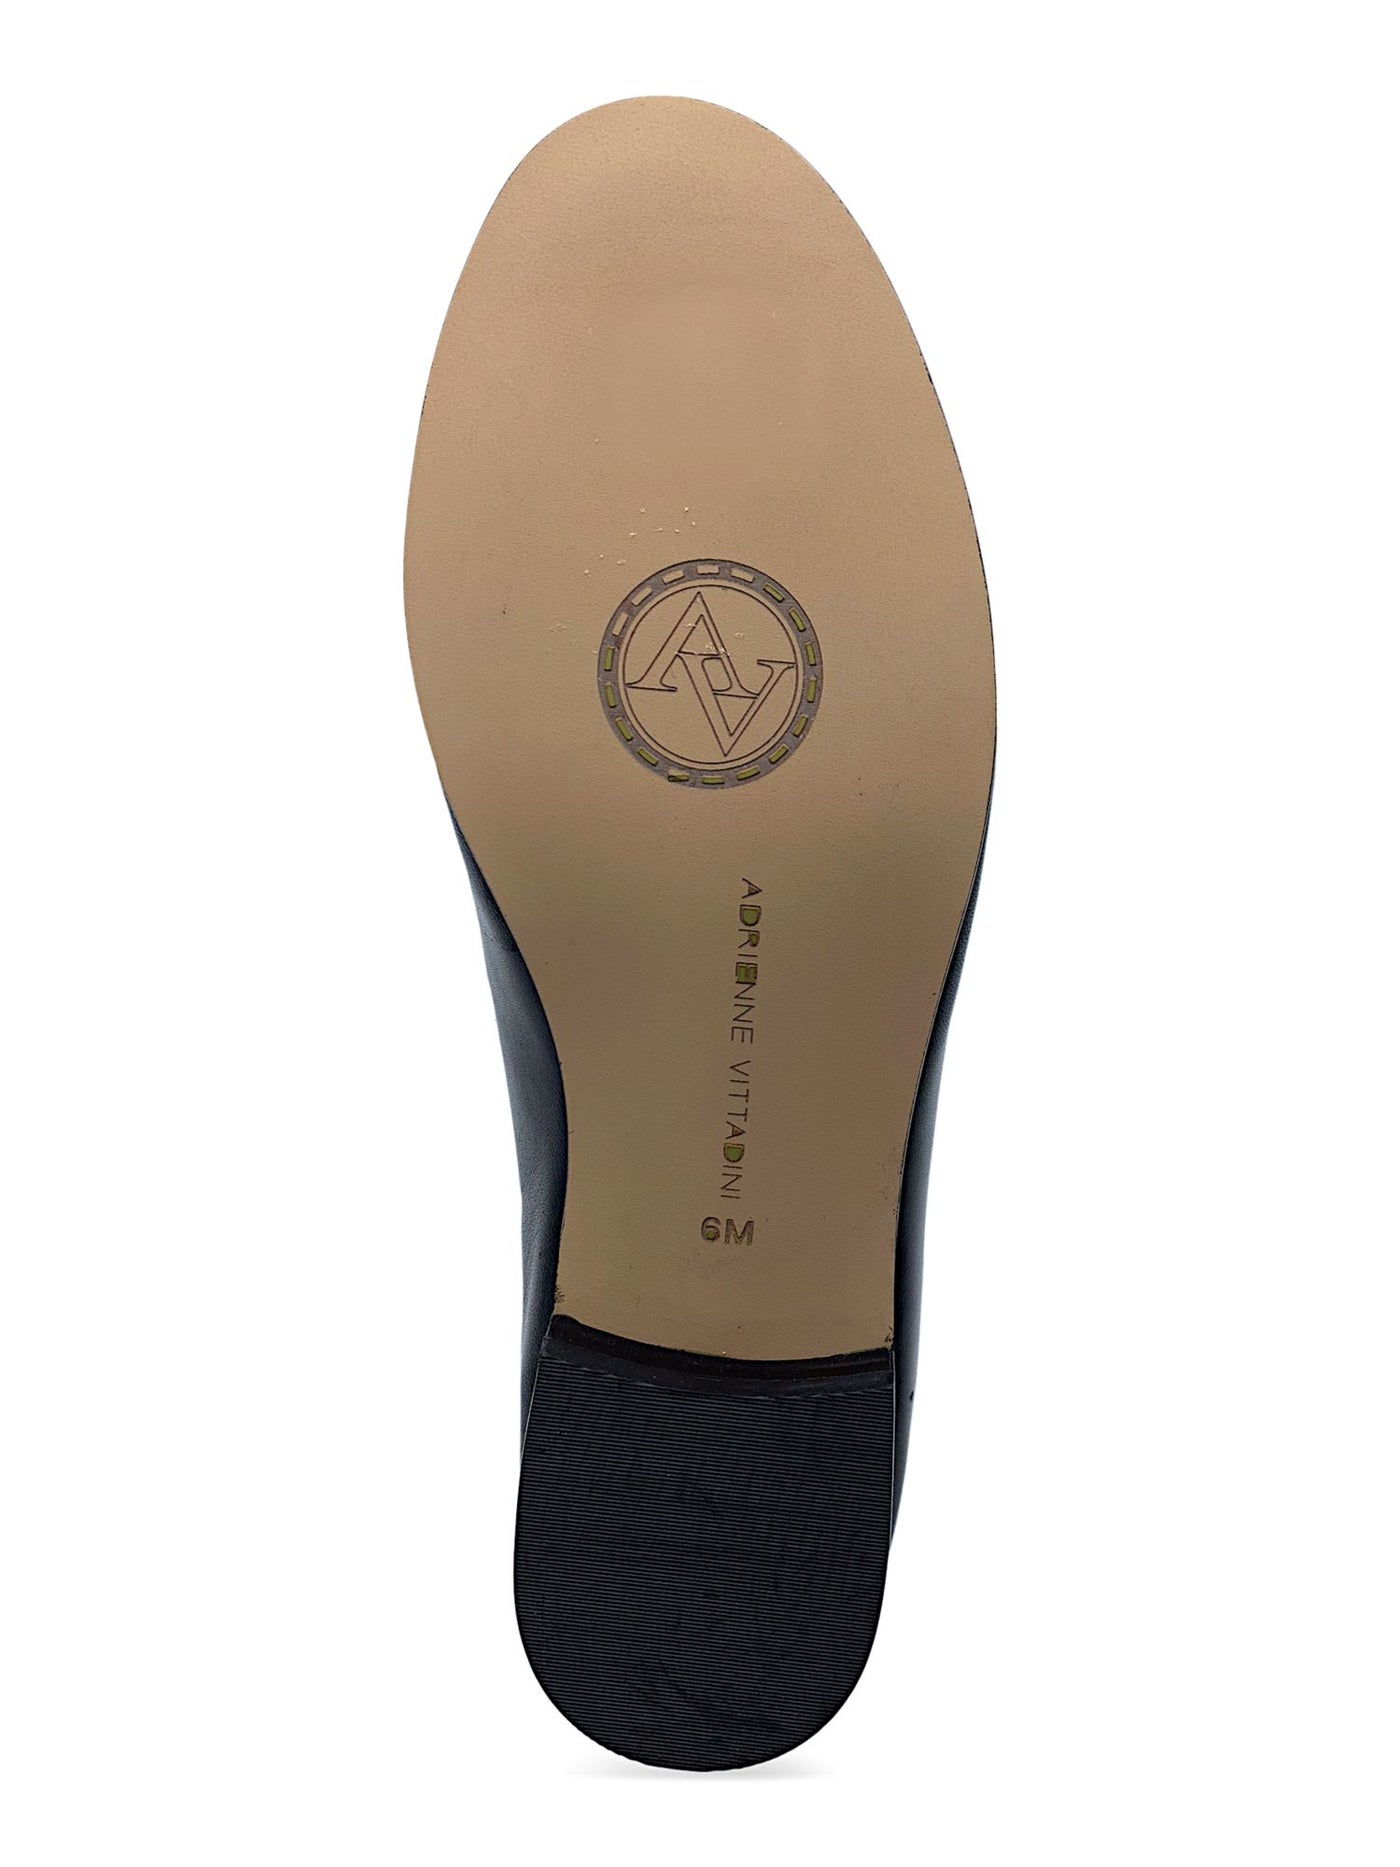 ADRIENNE VITTADINI Womens Black Metallic Hardware Detail Comfort Raja Round Toe Block Heel Slip On Leather Loafers Shoes 6.5 M